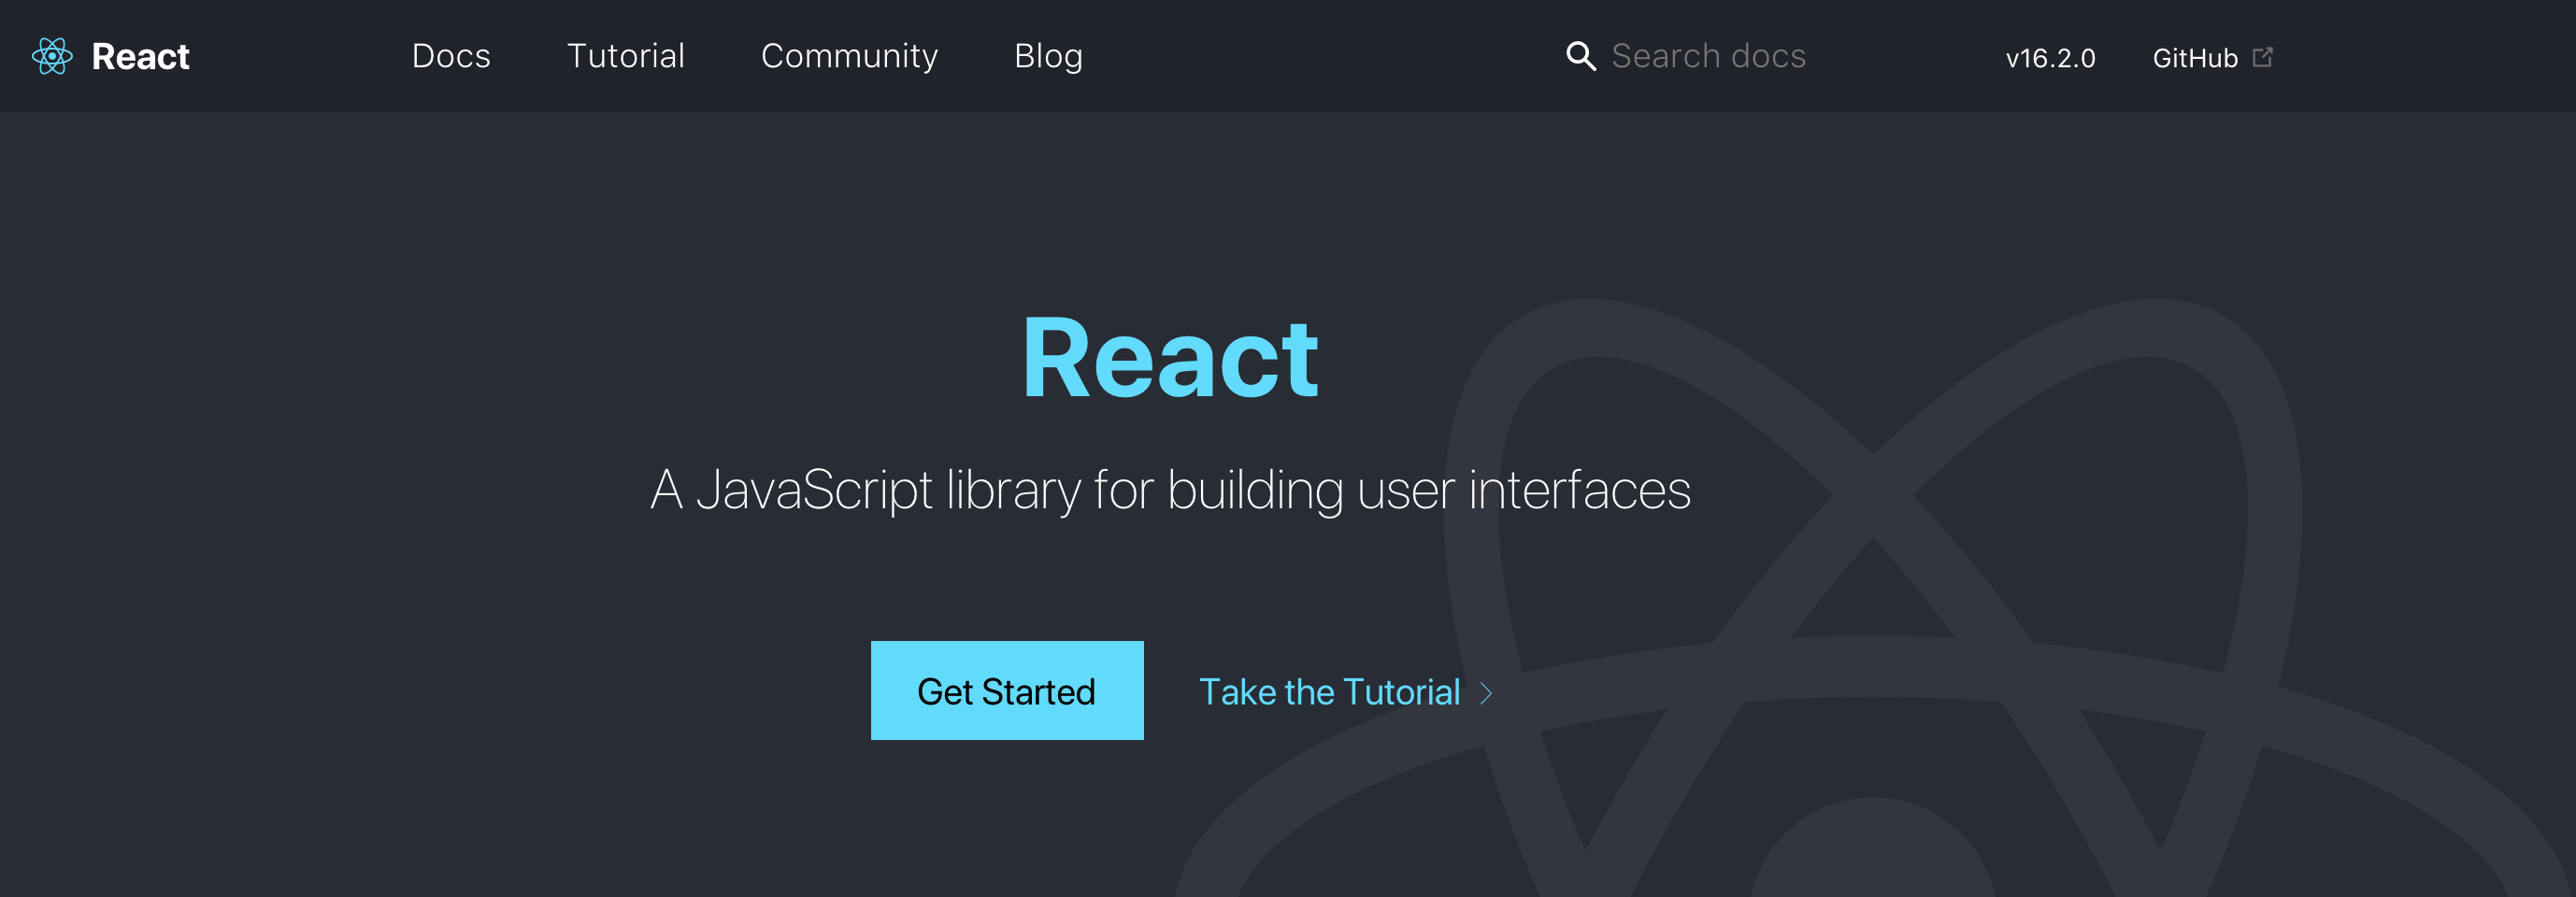 2018/02/learn-react-with-create-react-app